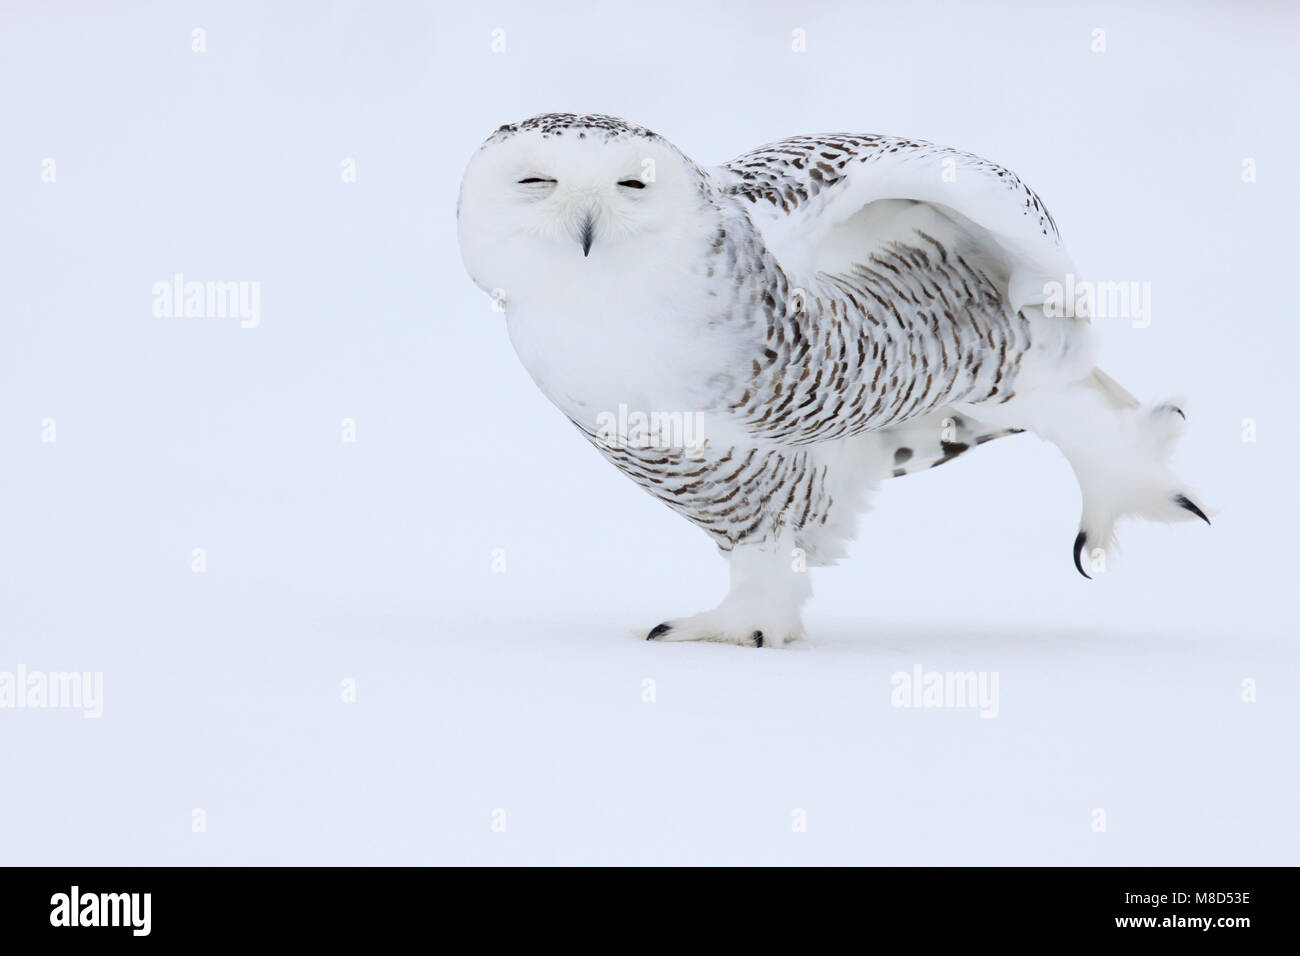 Sneeuwuil poot optillend in sneeuw; Snowy Owl one leg raising in snow Stock  Photo - Alamy